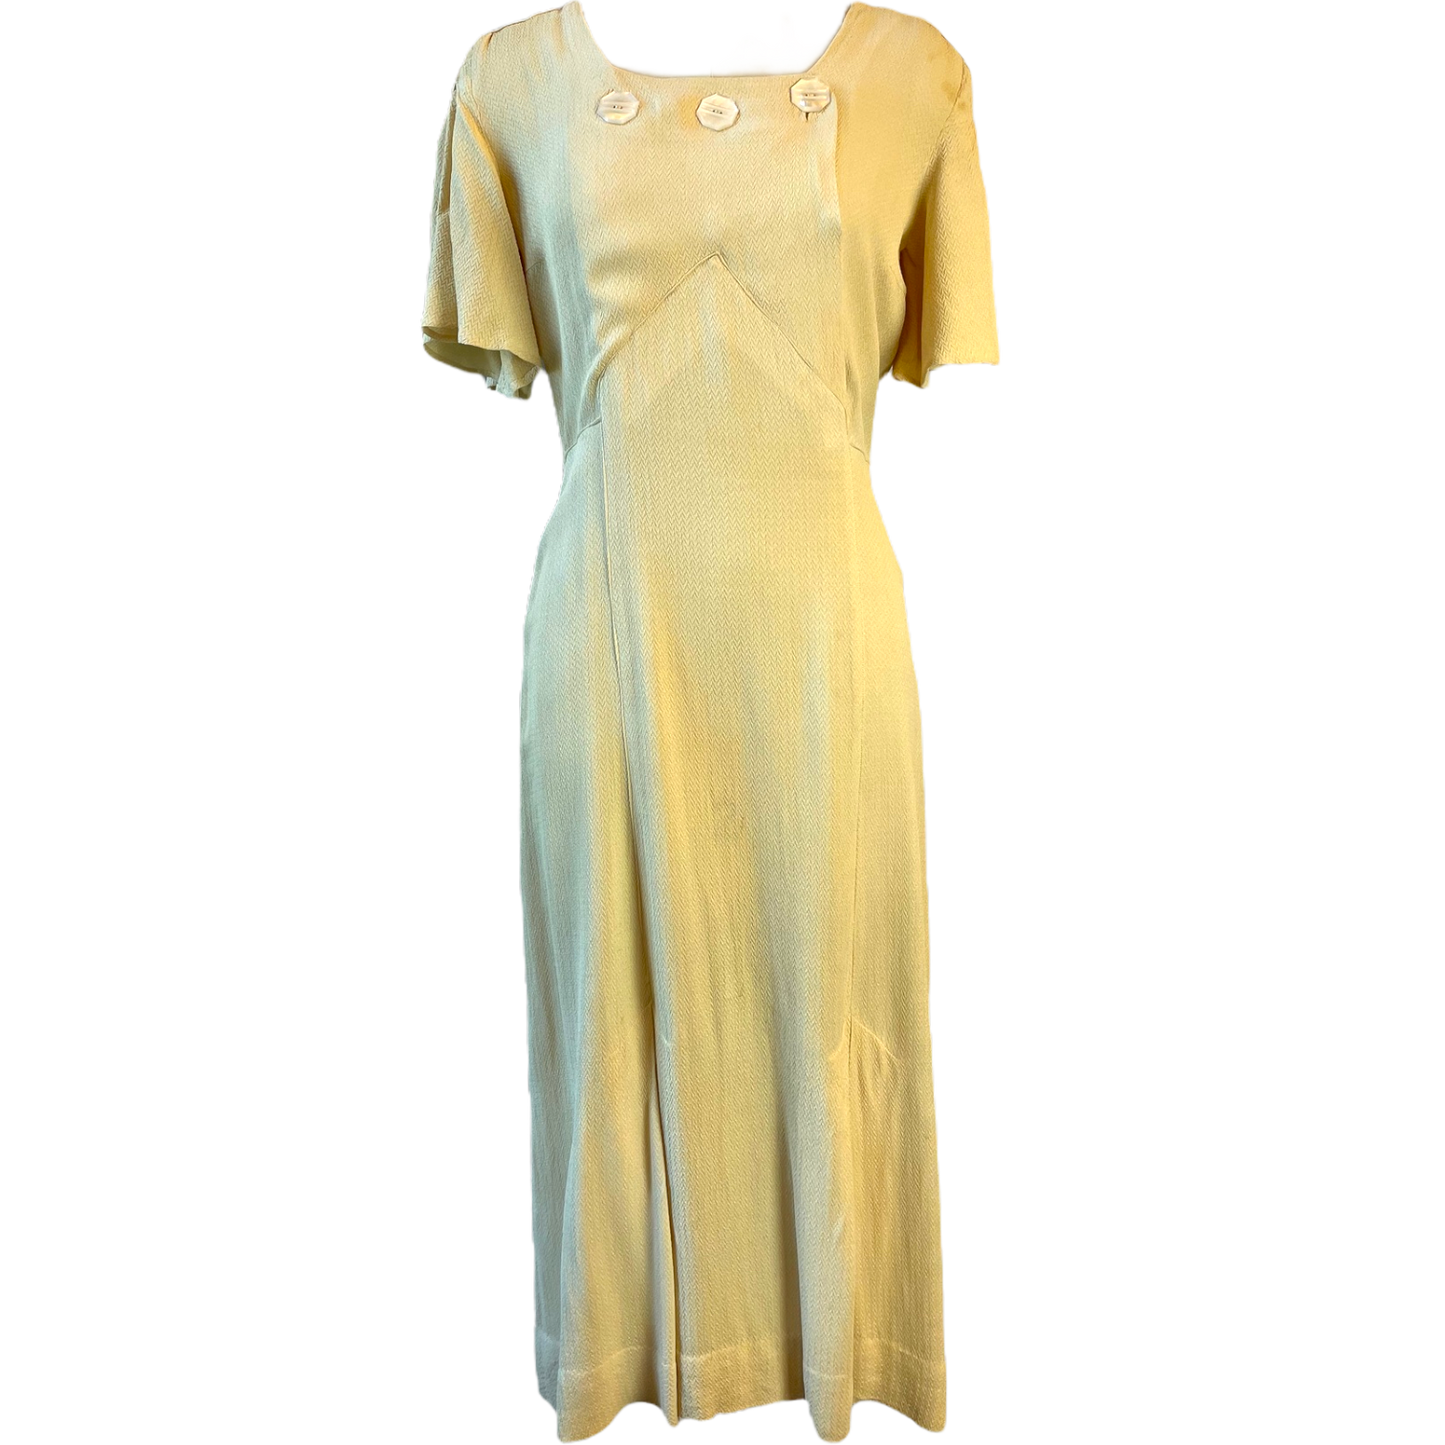 1940s Three Button Cream Dress*